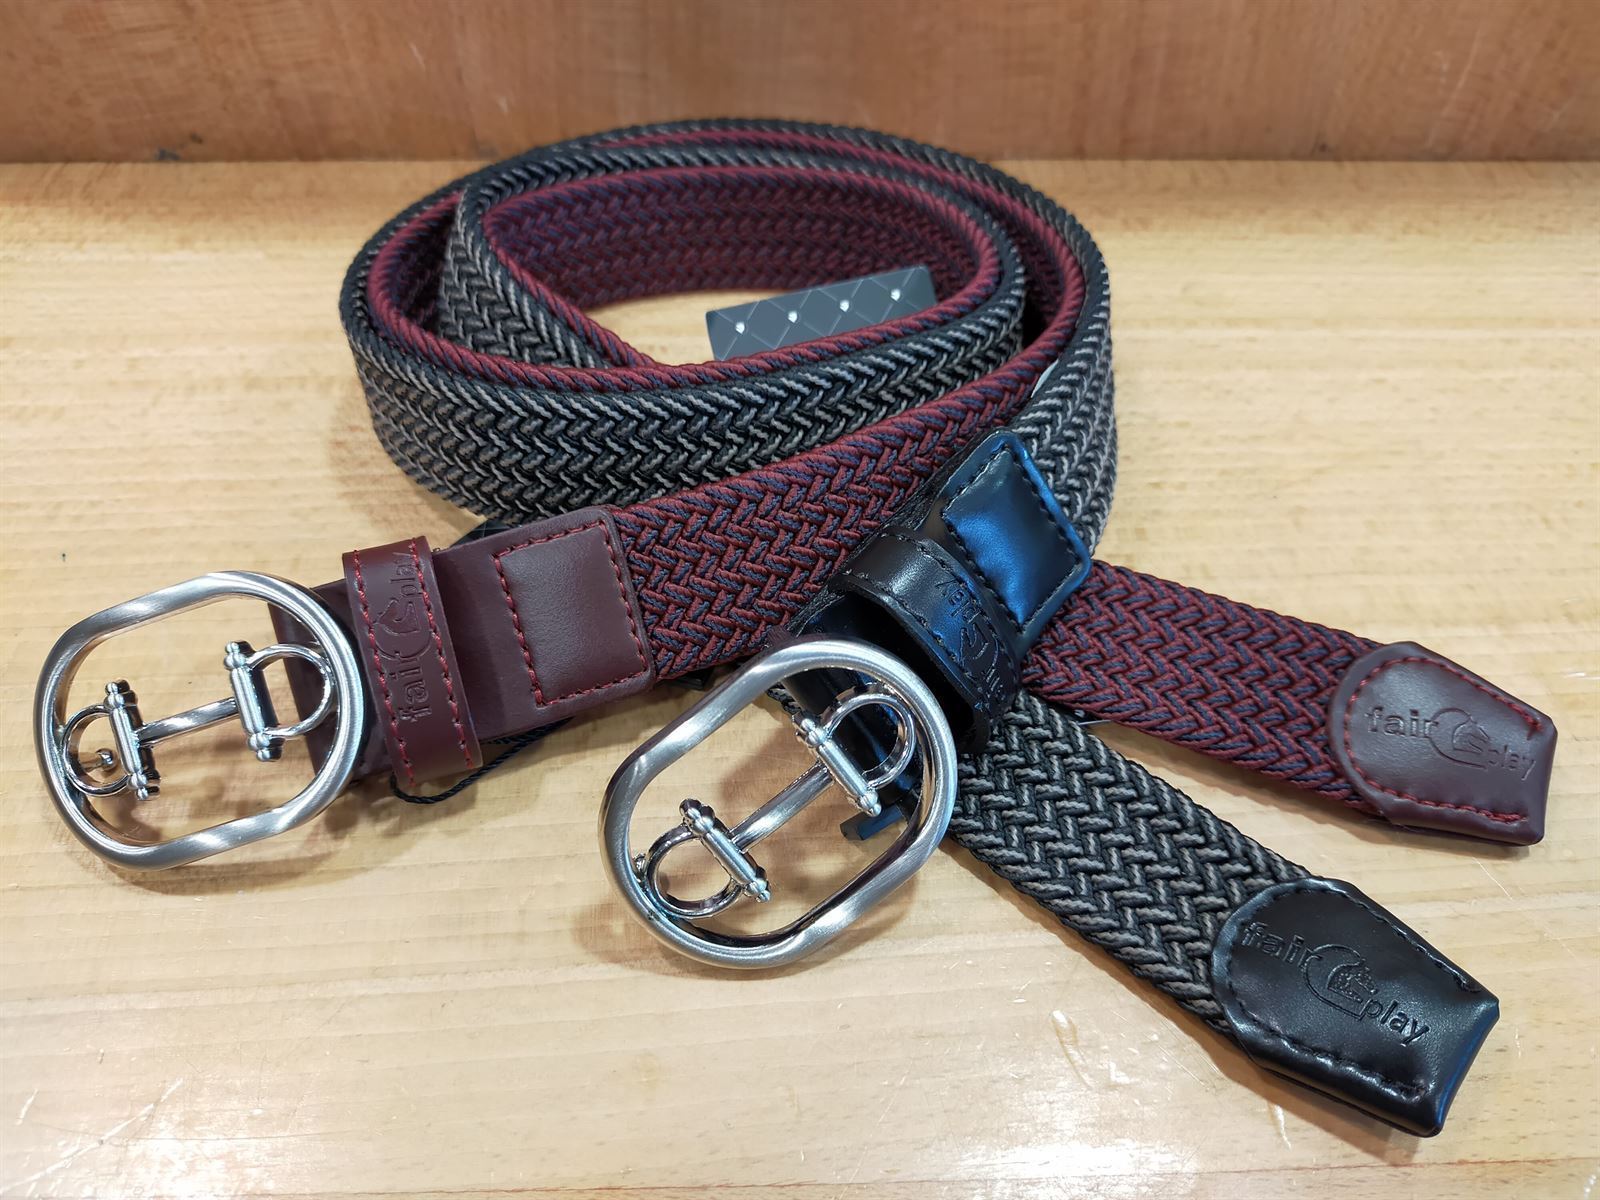 Cinturón elástico FAIR PLAY Valley color taupe/negro talla S/M - Imagen 3